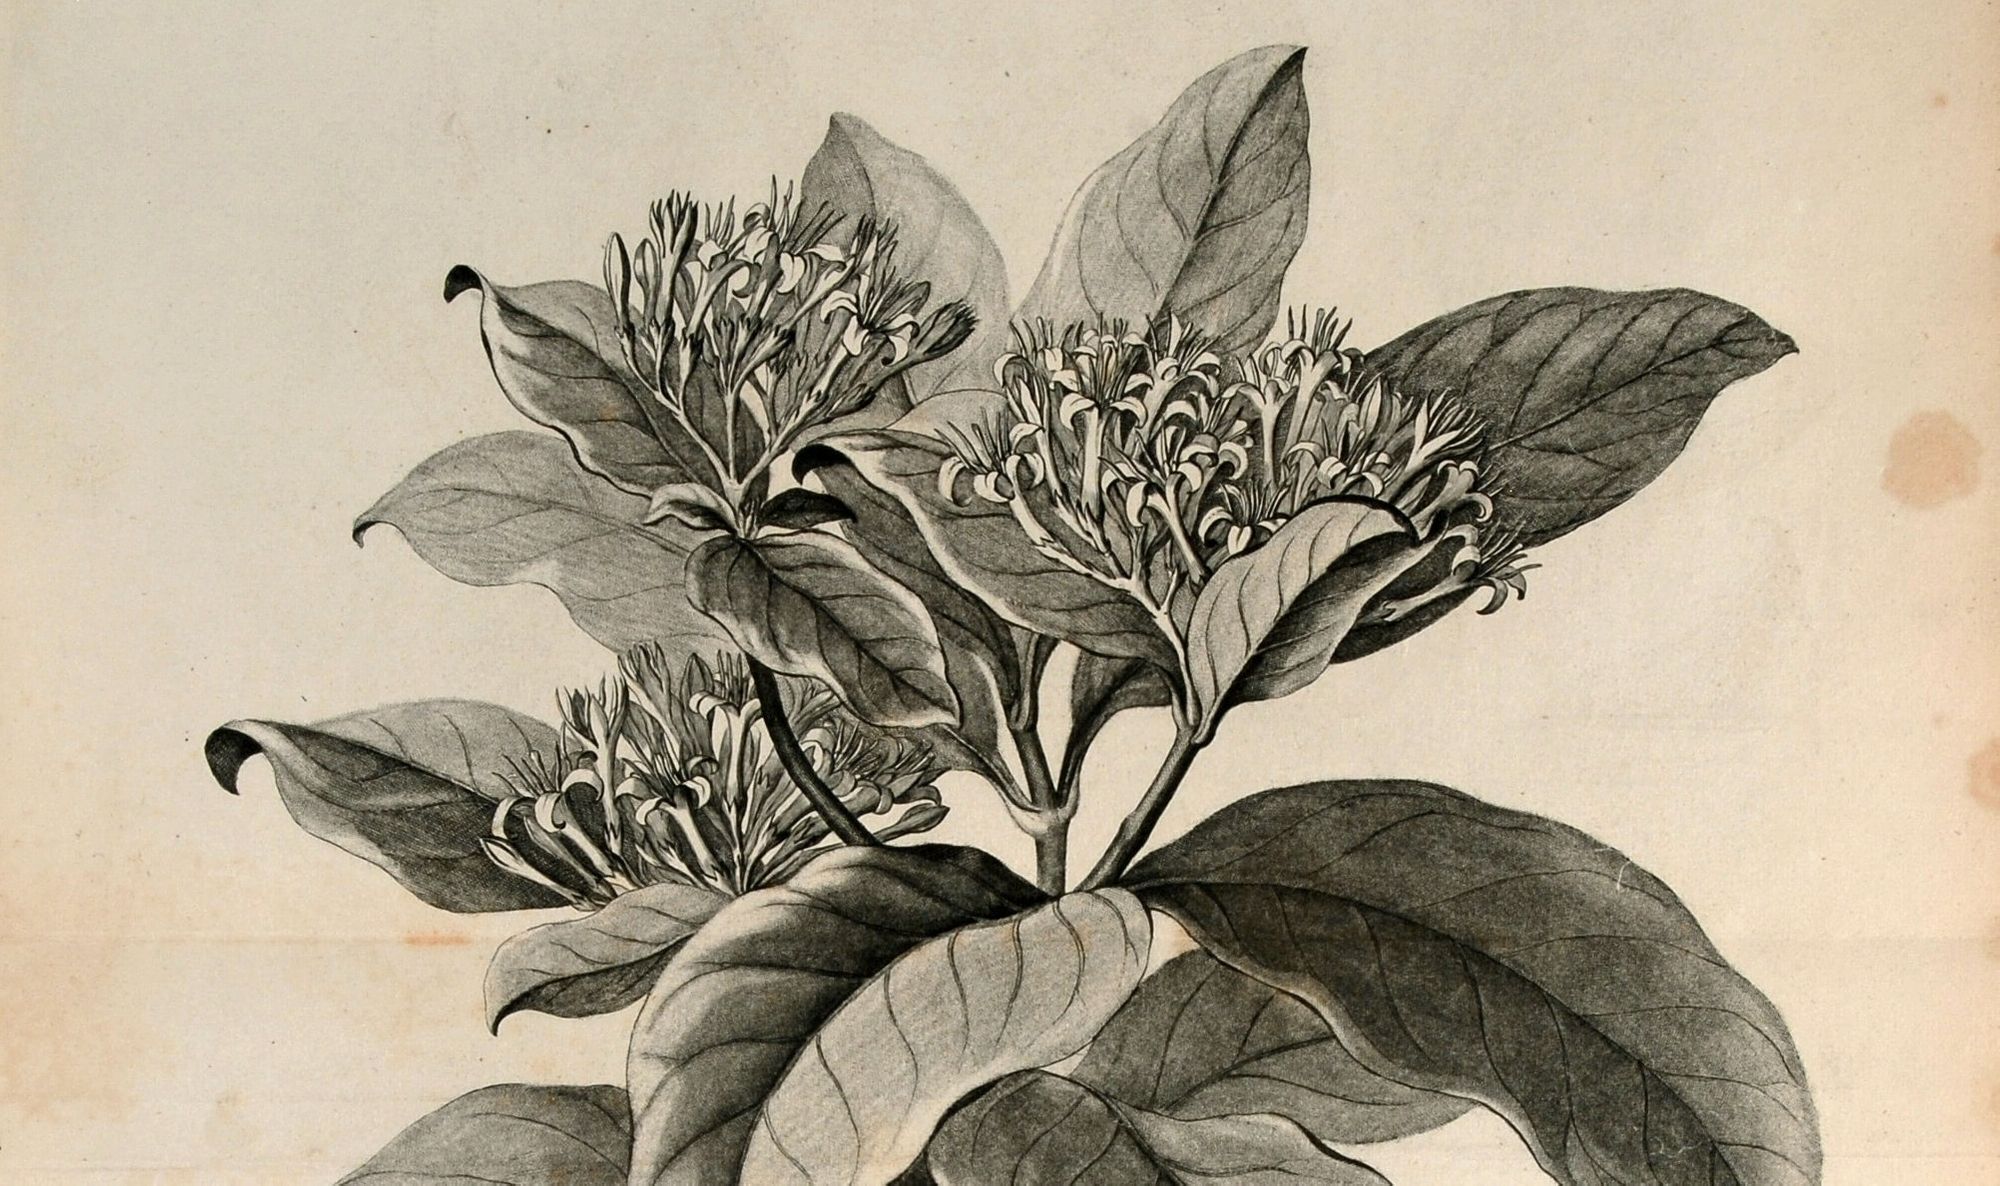 Scientific American Blog: How Have Plants Shaped Societies?